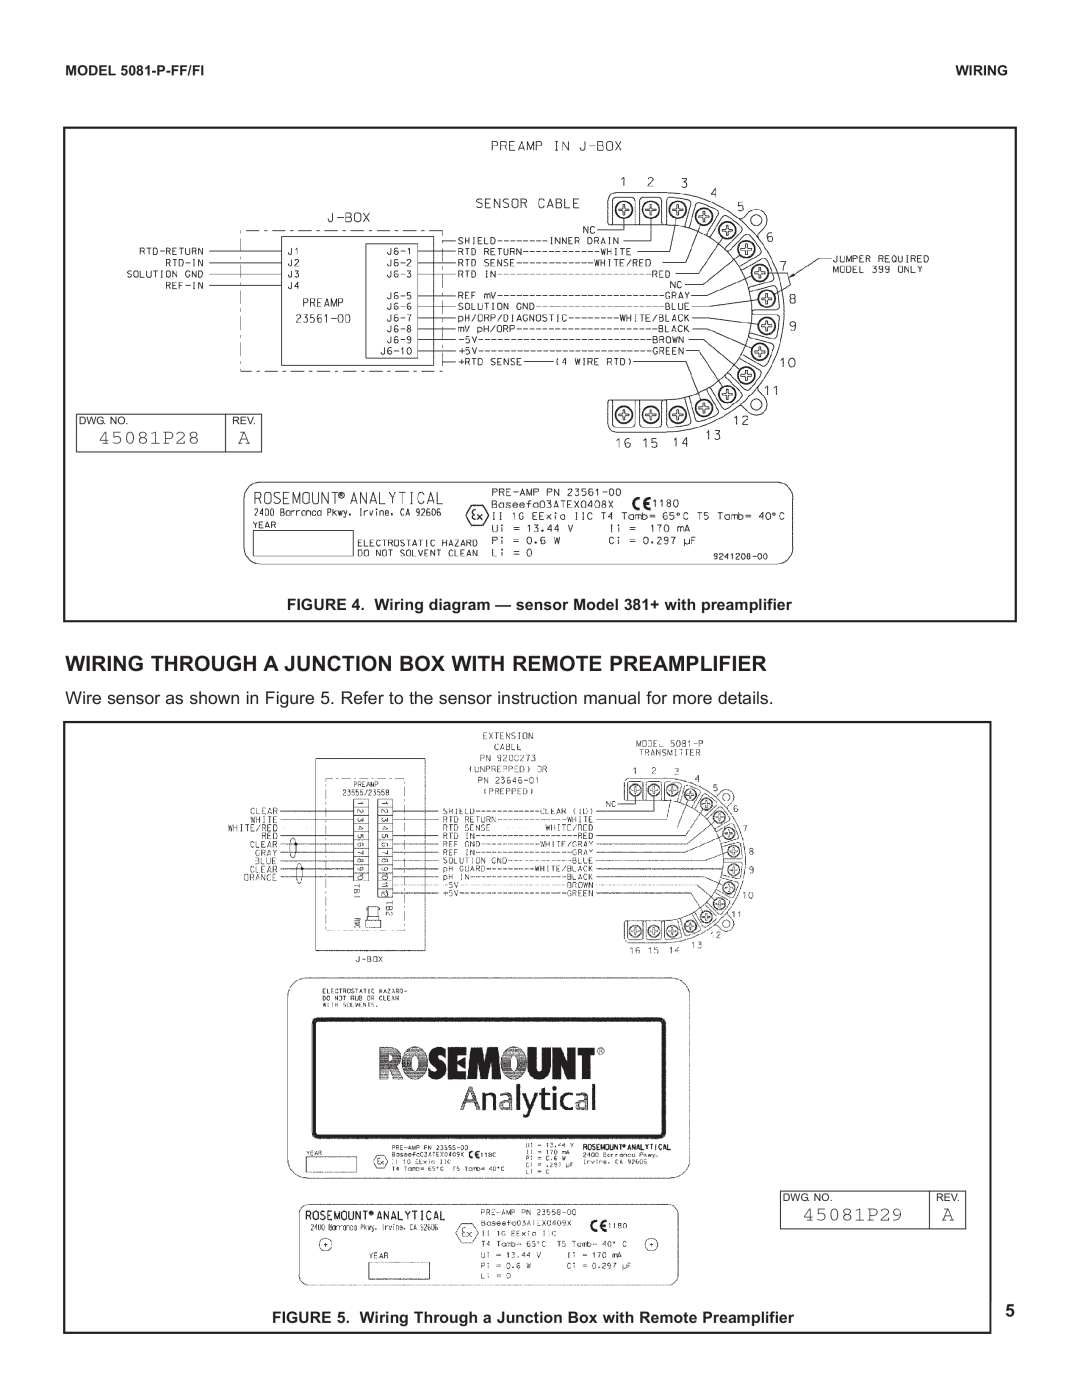 Emerson 5081-P-FF/FI instruction sheet 45081P28, 45081P29 